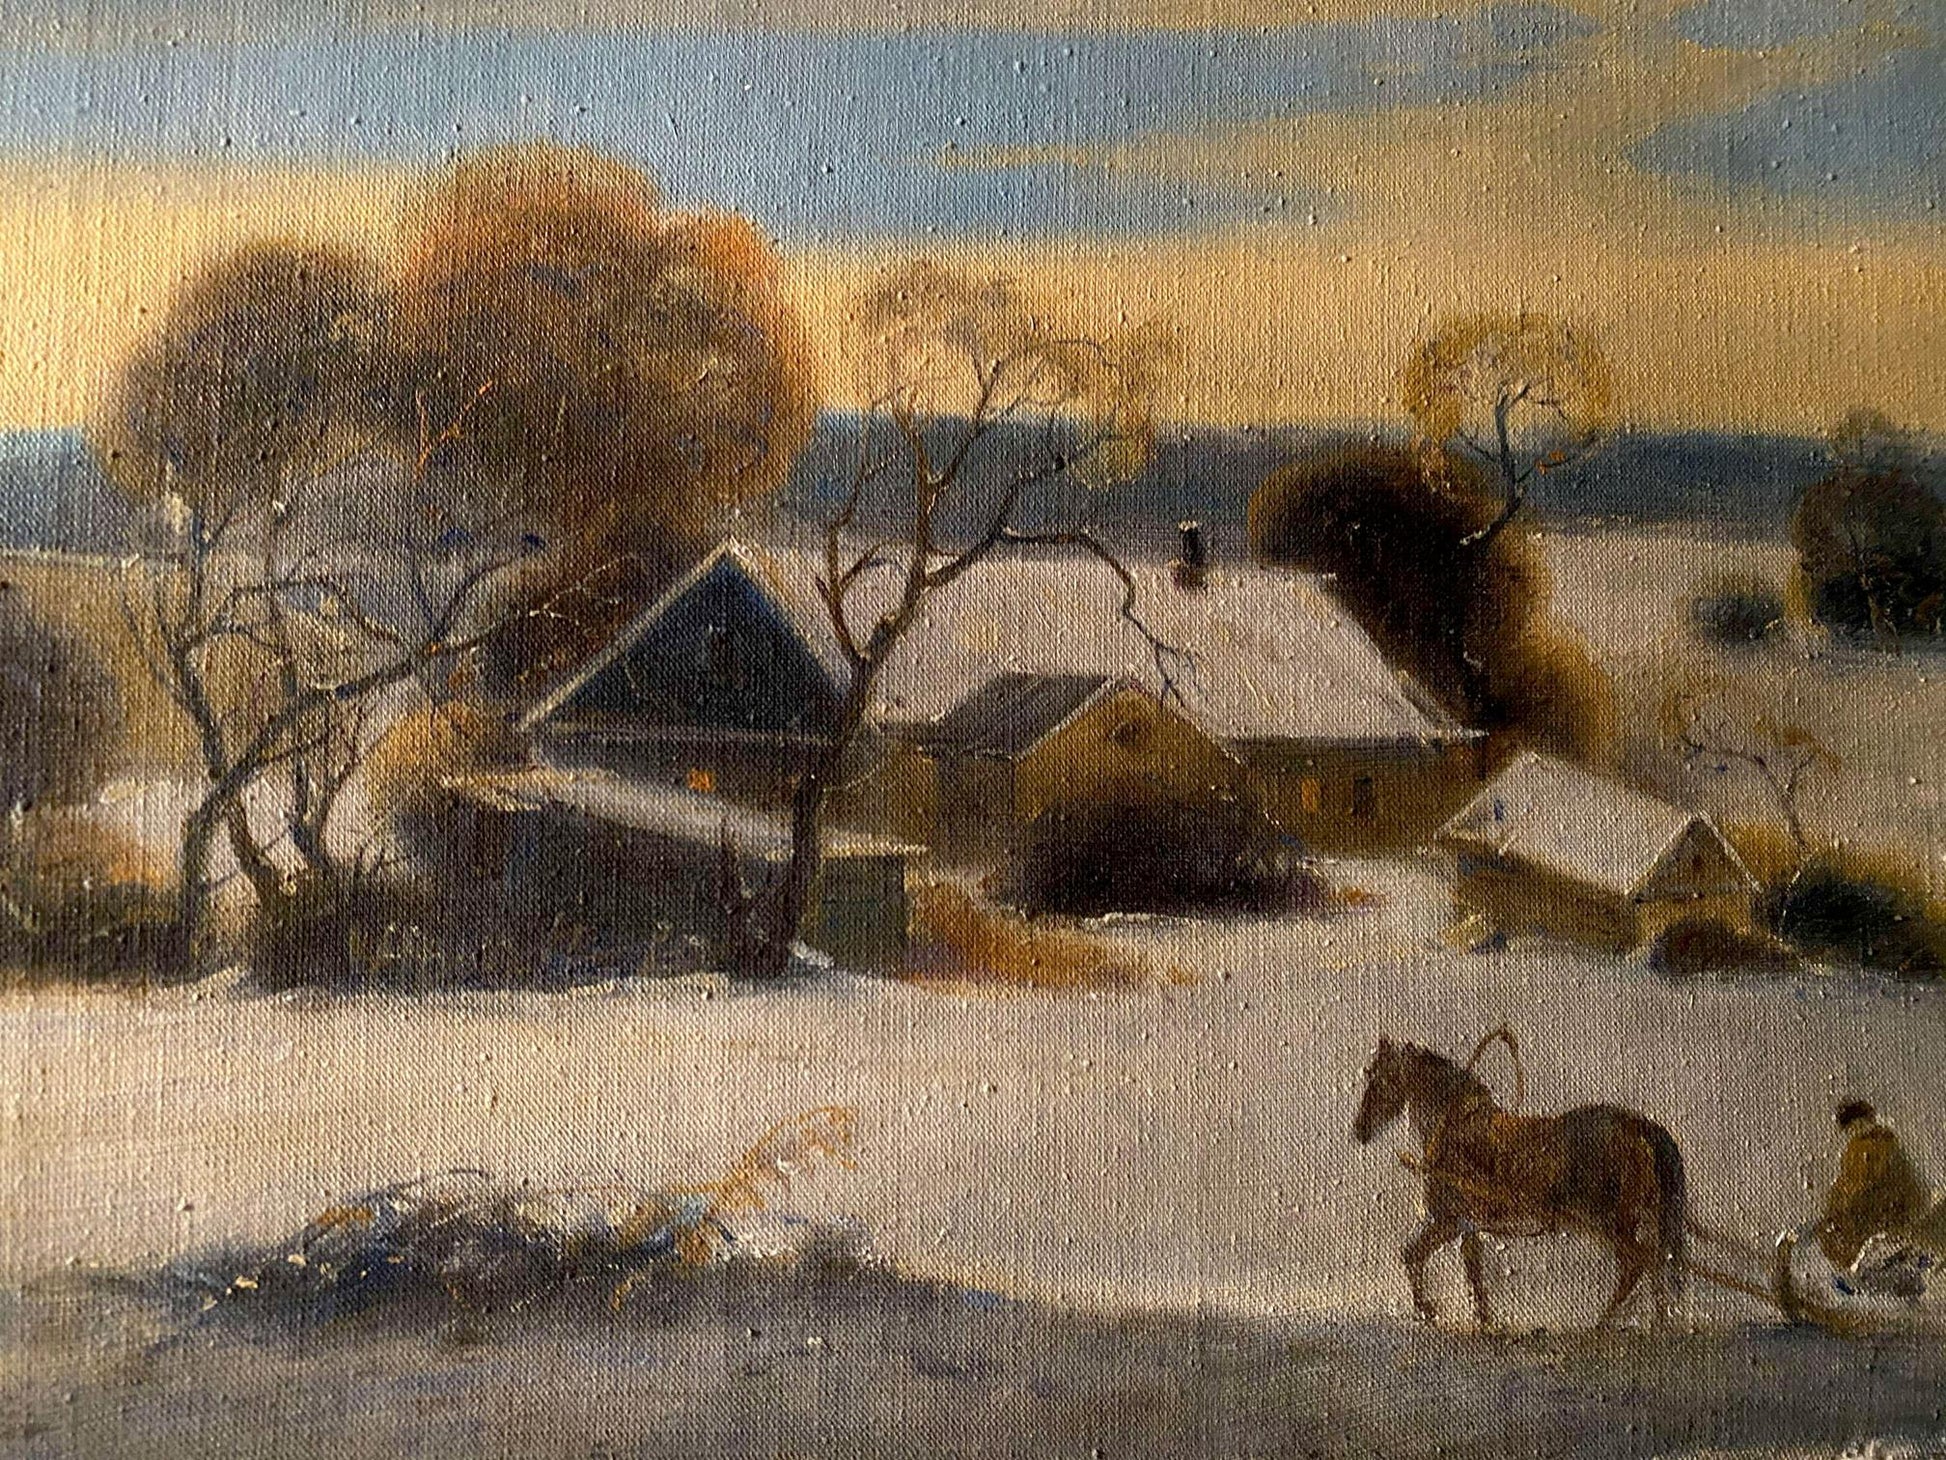 winter painting